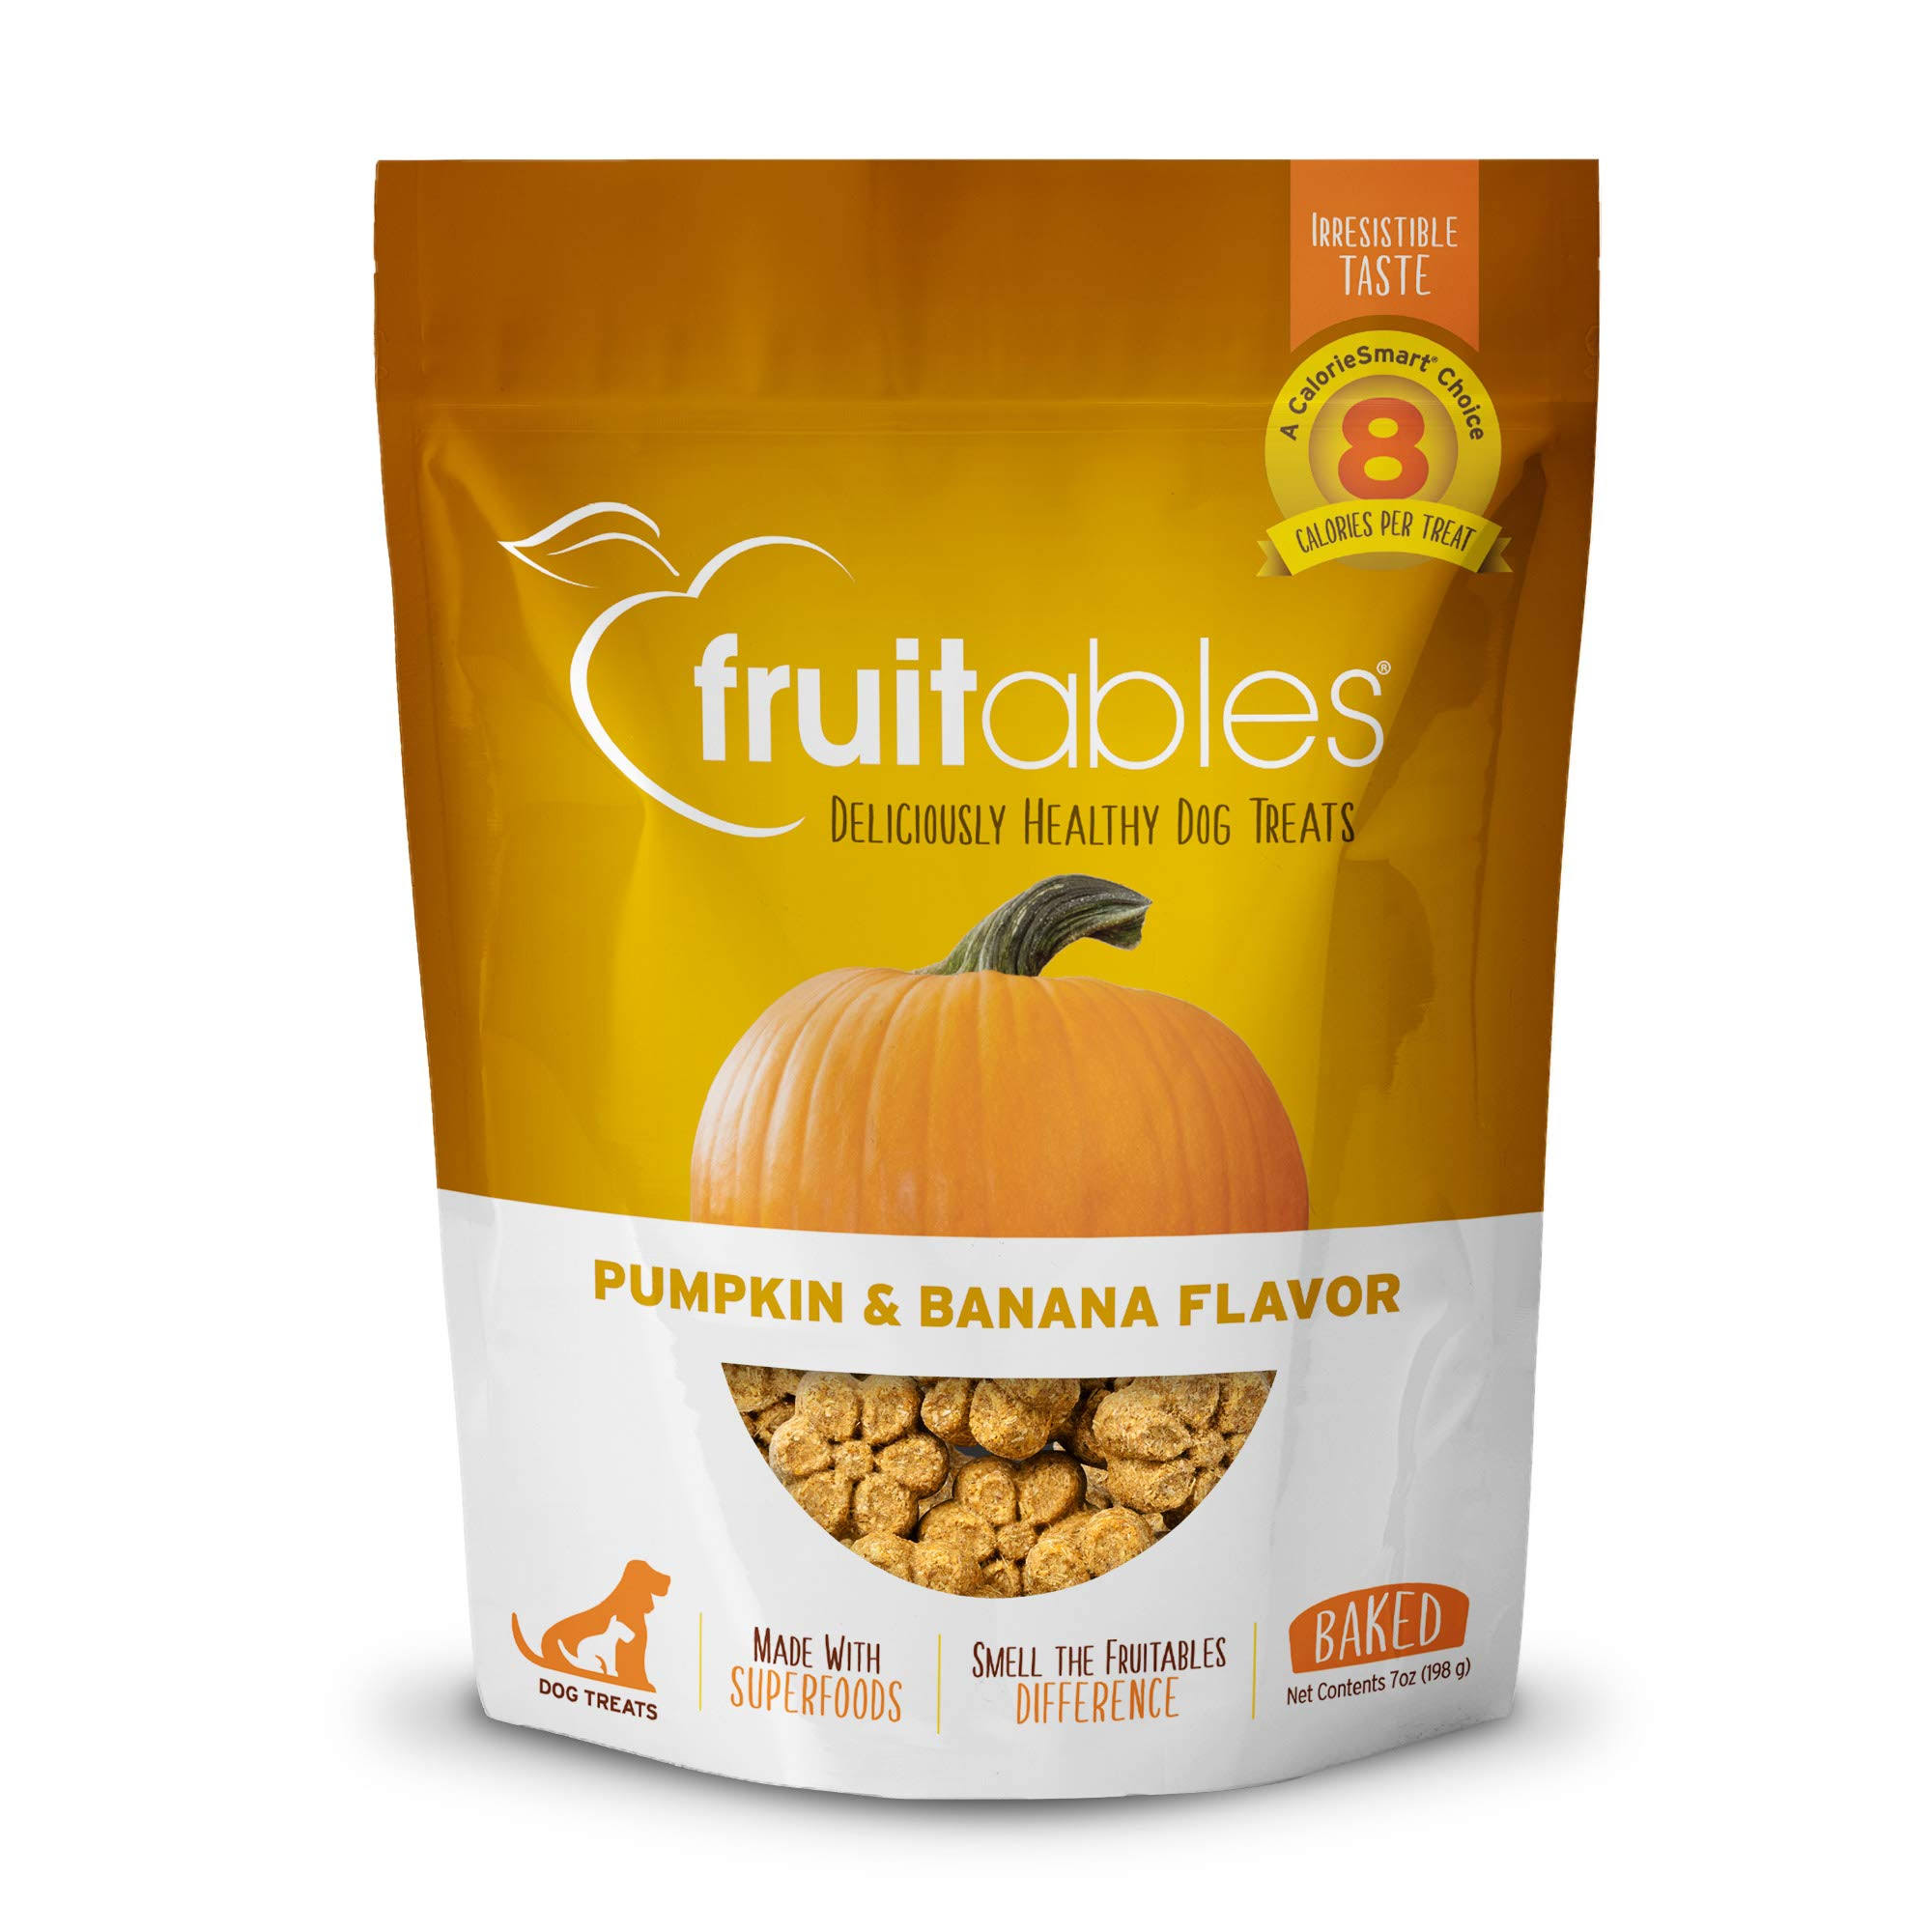 Fruitables Pet Foods Dog Treats - Pumpkin and Banana Flavor